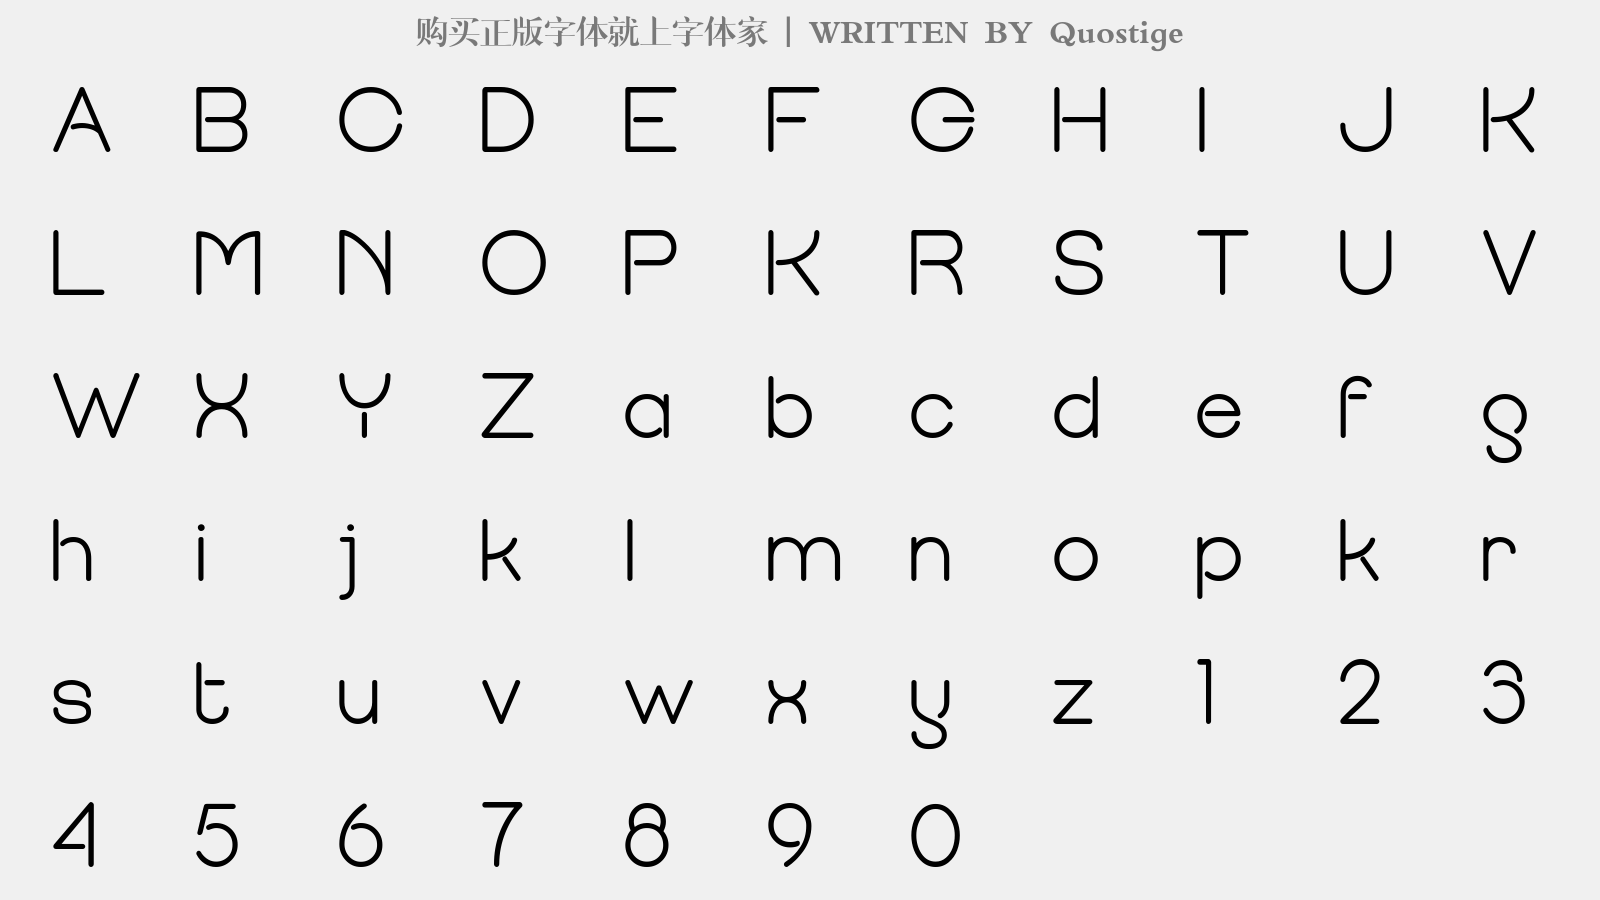 Quostige - 大写字母/小写字母/数字